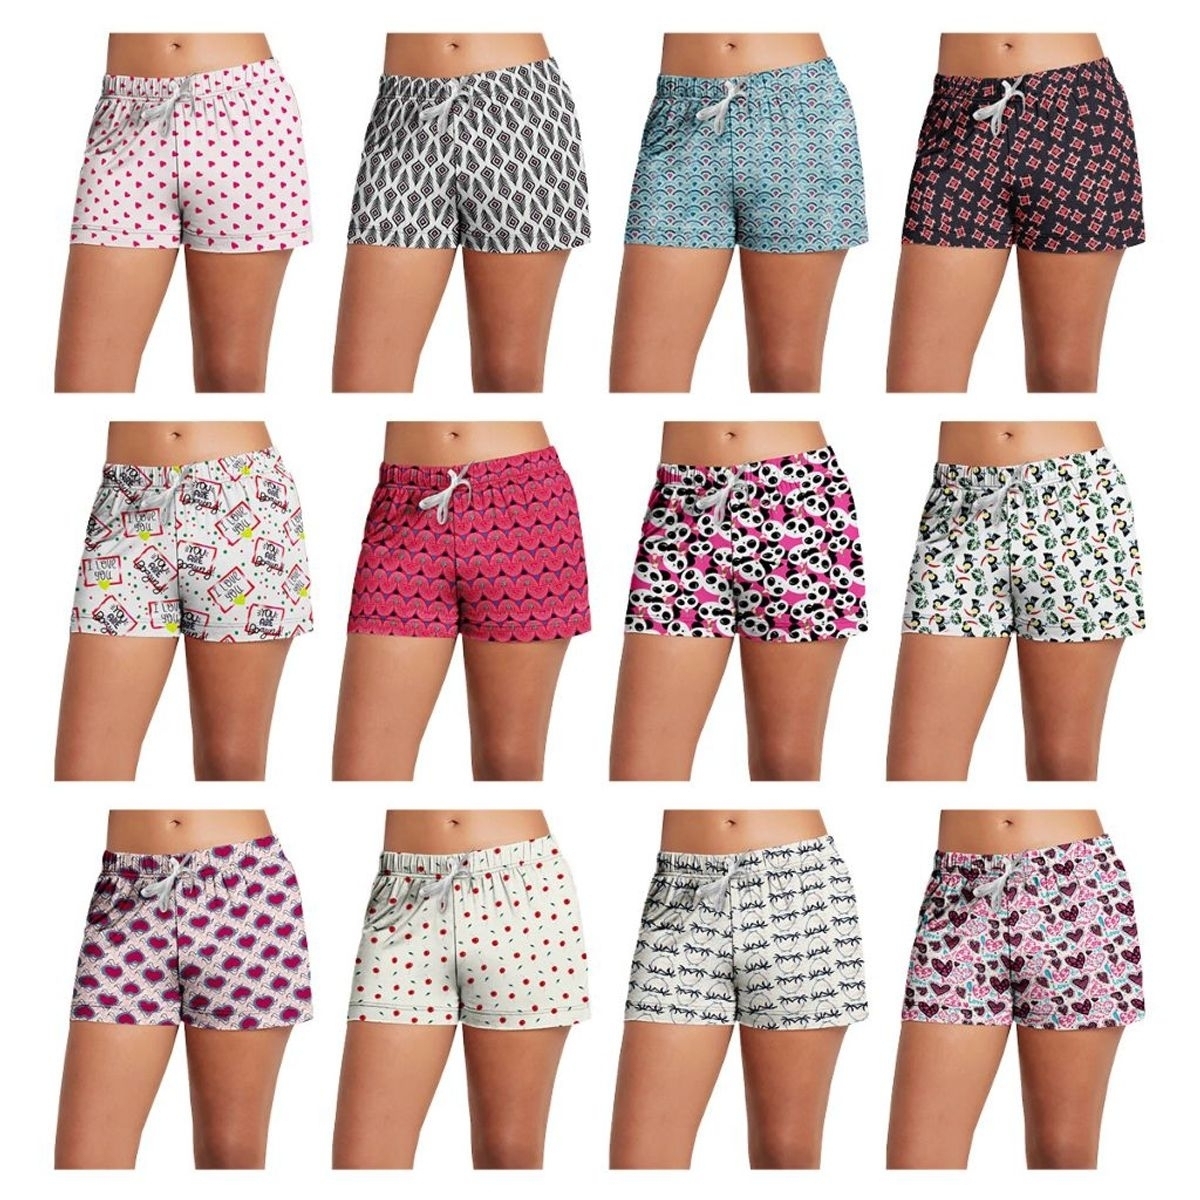 2-Pack: Women's Super-Soft Lightweight Fun Printed Comfy Lounge Bottom Pajama Shorts W/ Drawstring - Large, Shapes